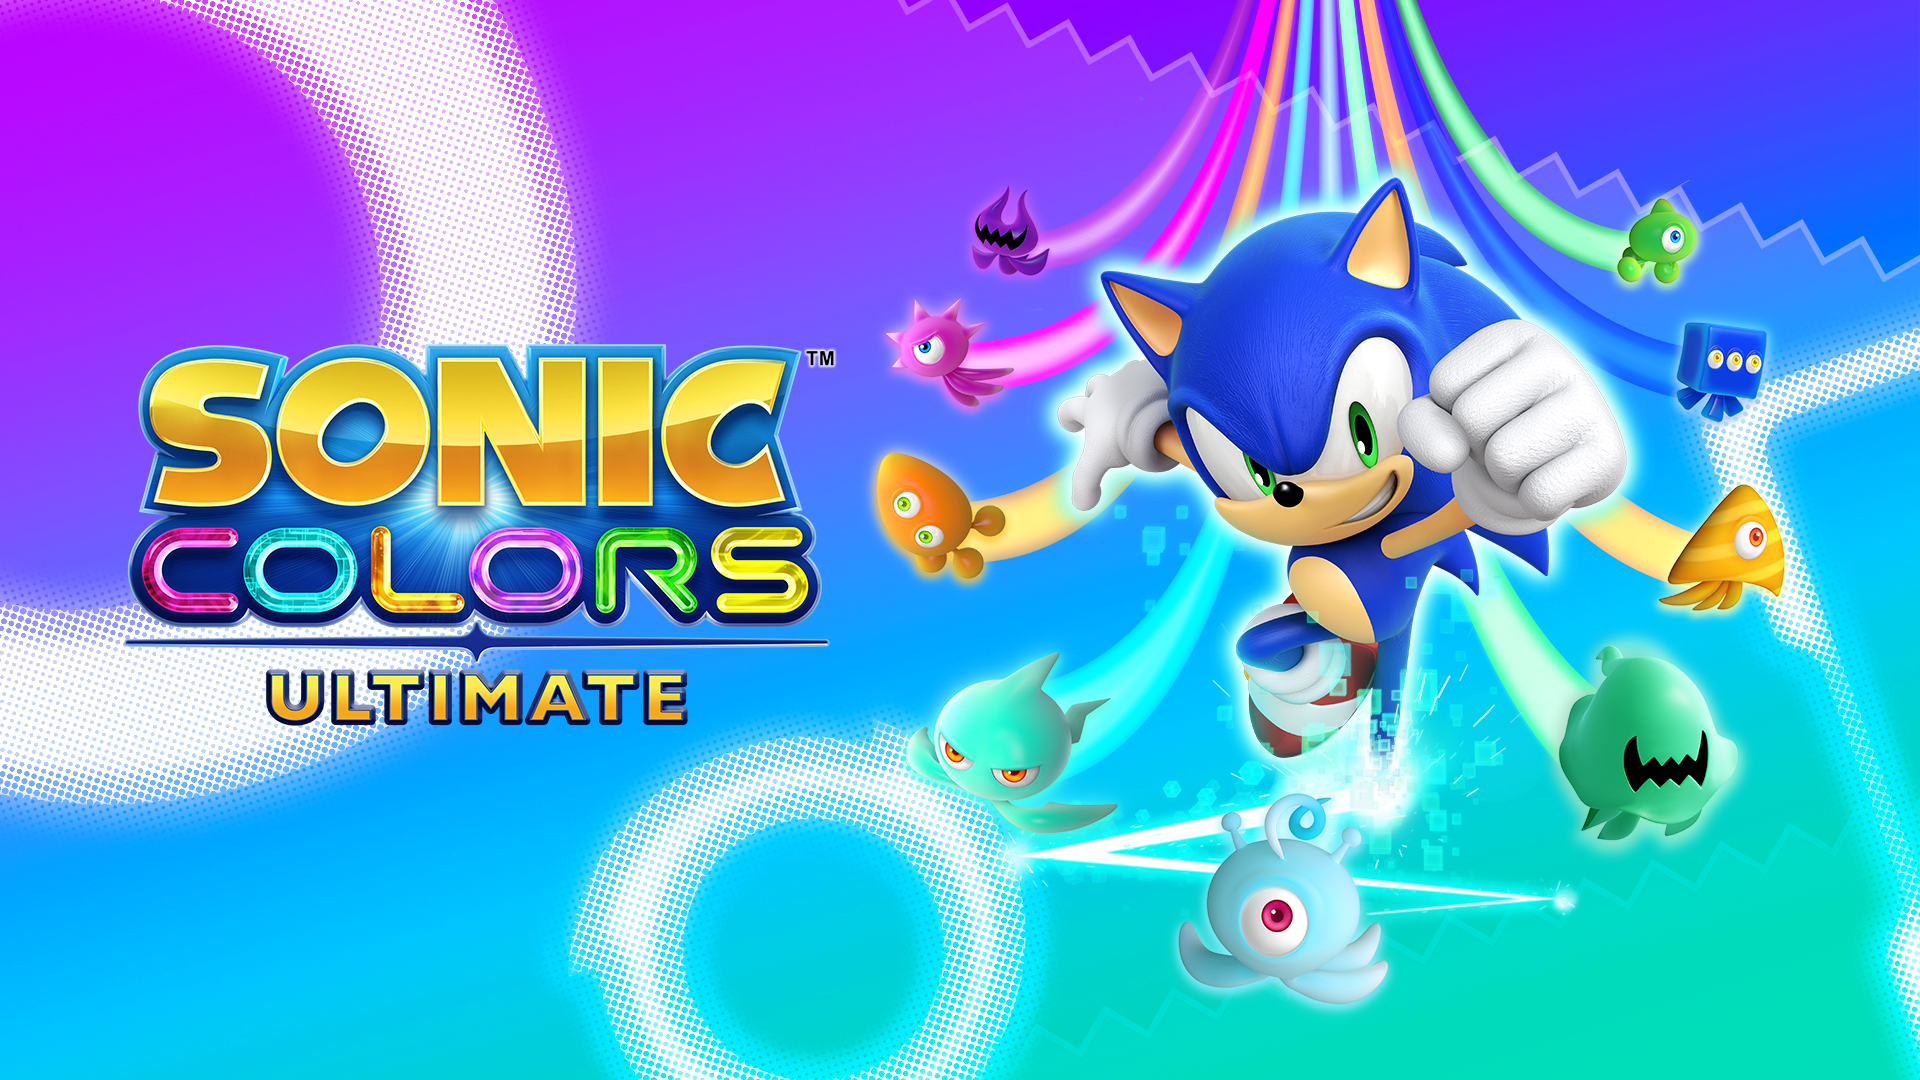 Sonic Colors Ultimate เตรียมวางจำหน่าย 7 ก.ย. นี้